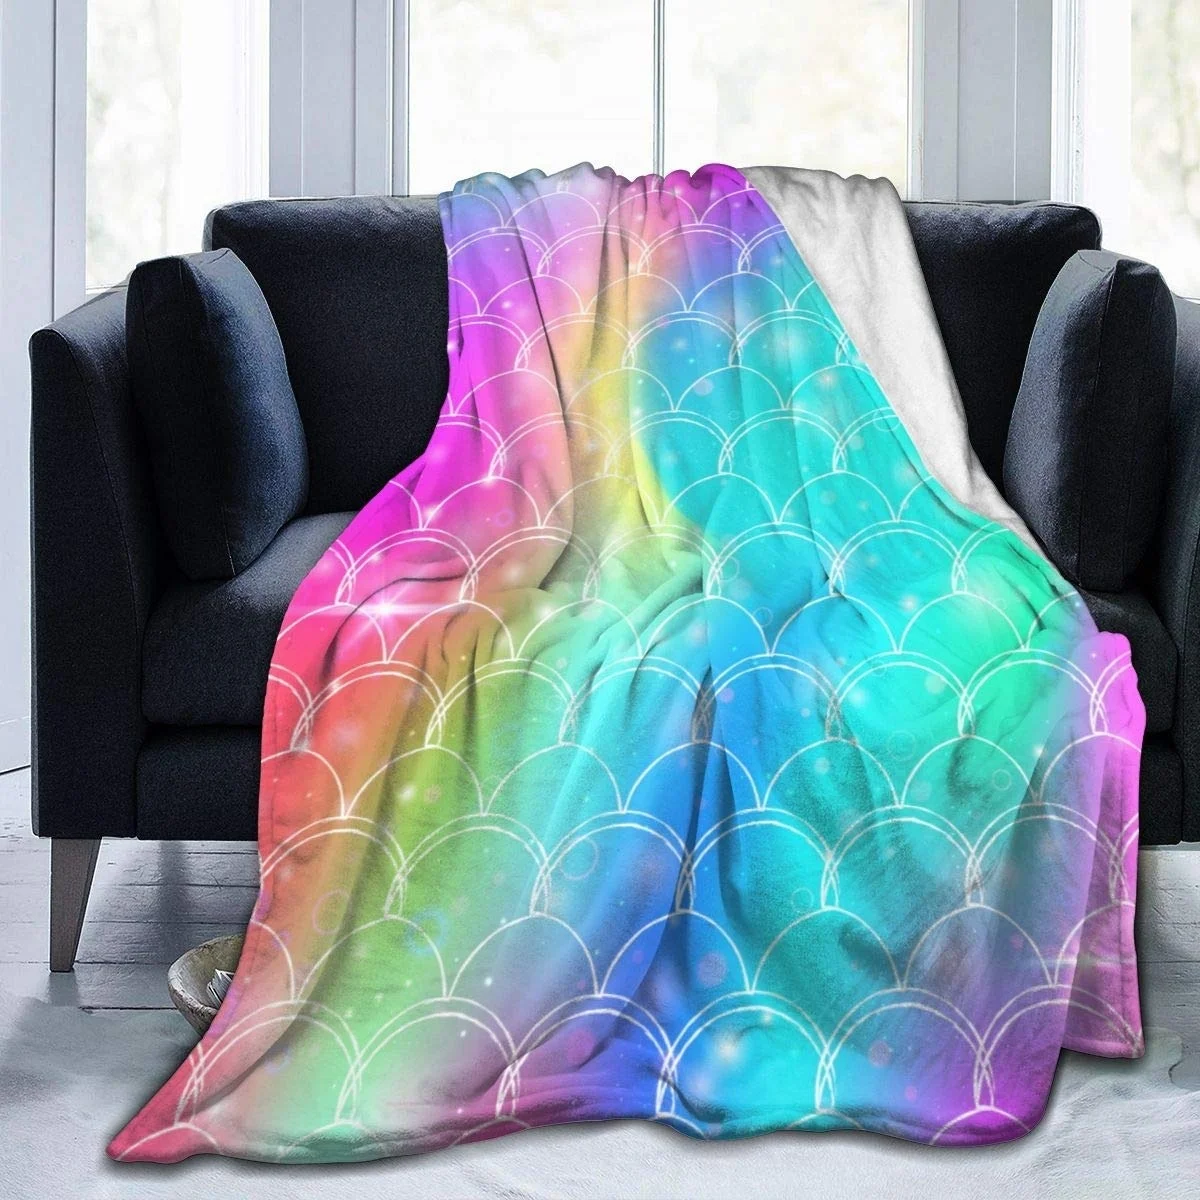 

2022 Flannel Fleece Bed Blanket Charming Mermaid Fish Scale Throw Blanket All Season Warm Fuzzy Light Weight Cozy Plush Blanket